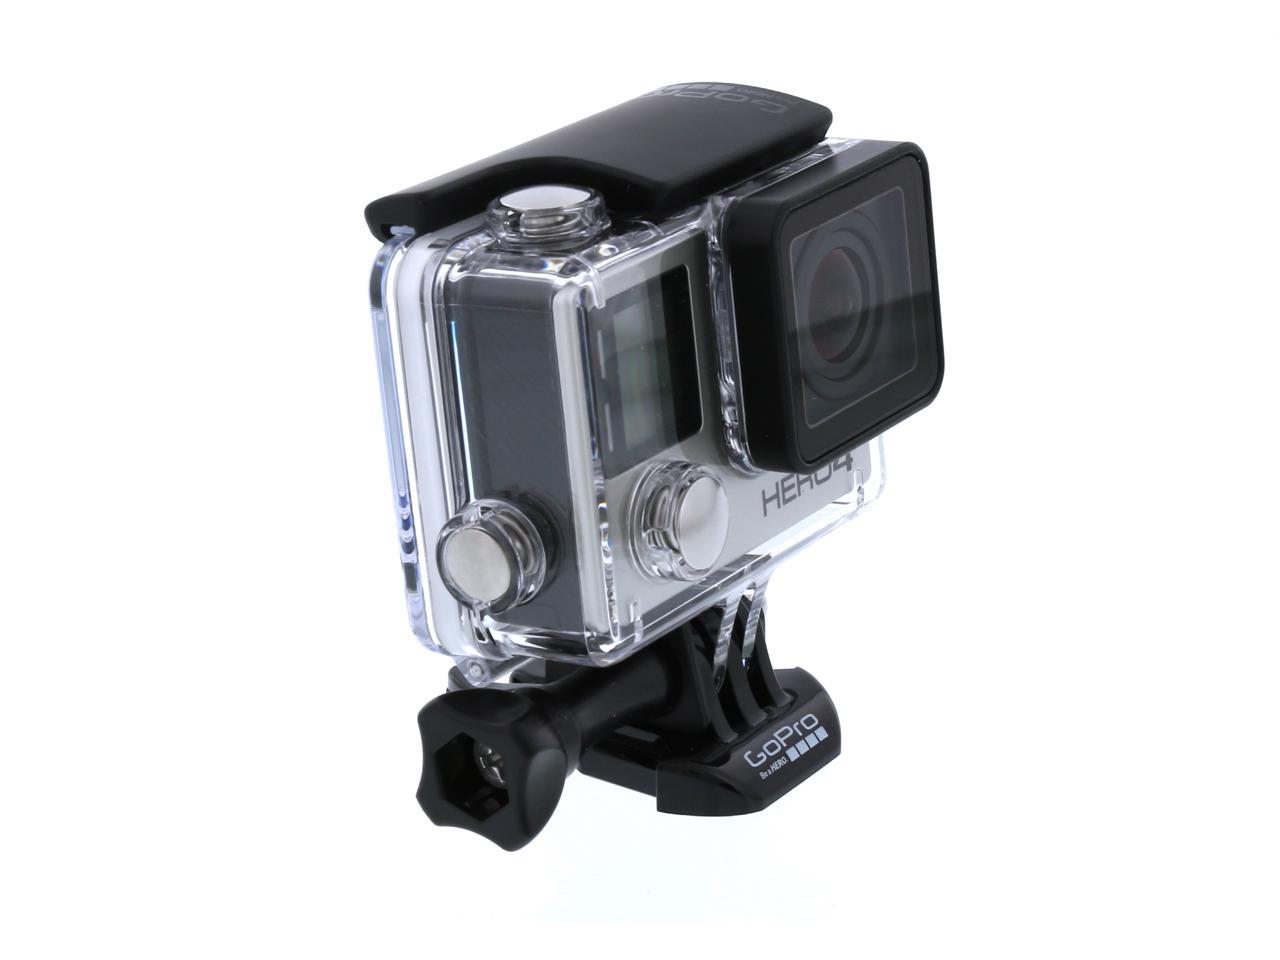 GoPro HERO4 Black CHDHX-401 Black 12 MP Action Camera - CHDHX-401 